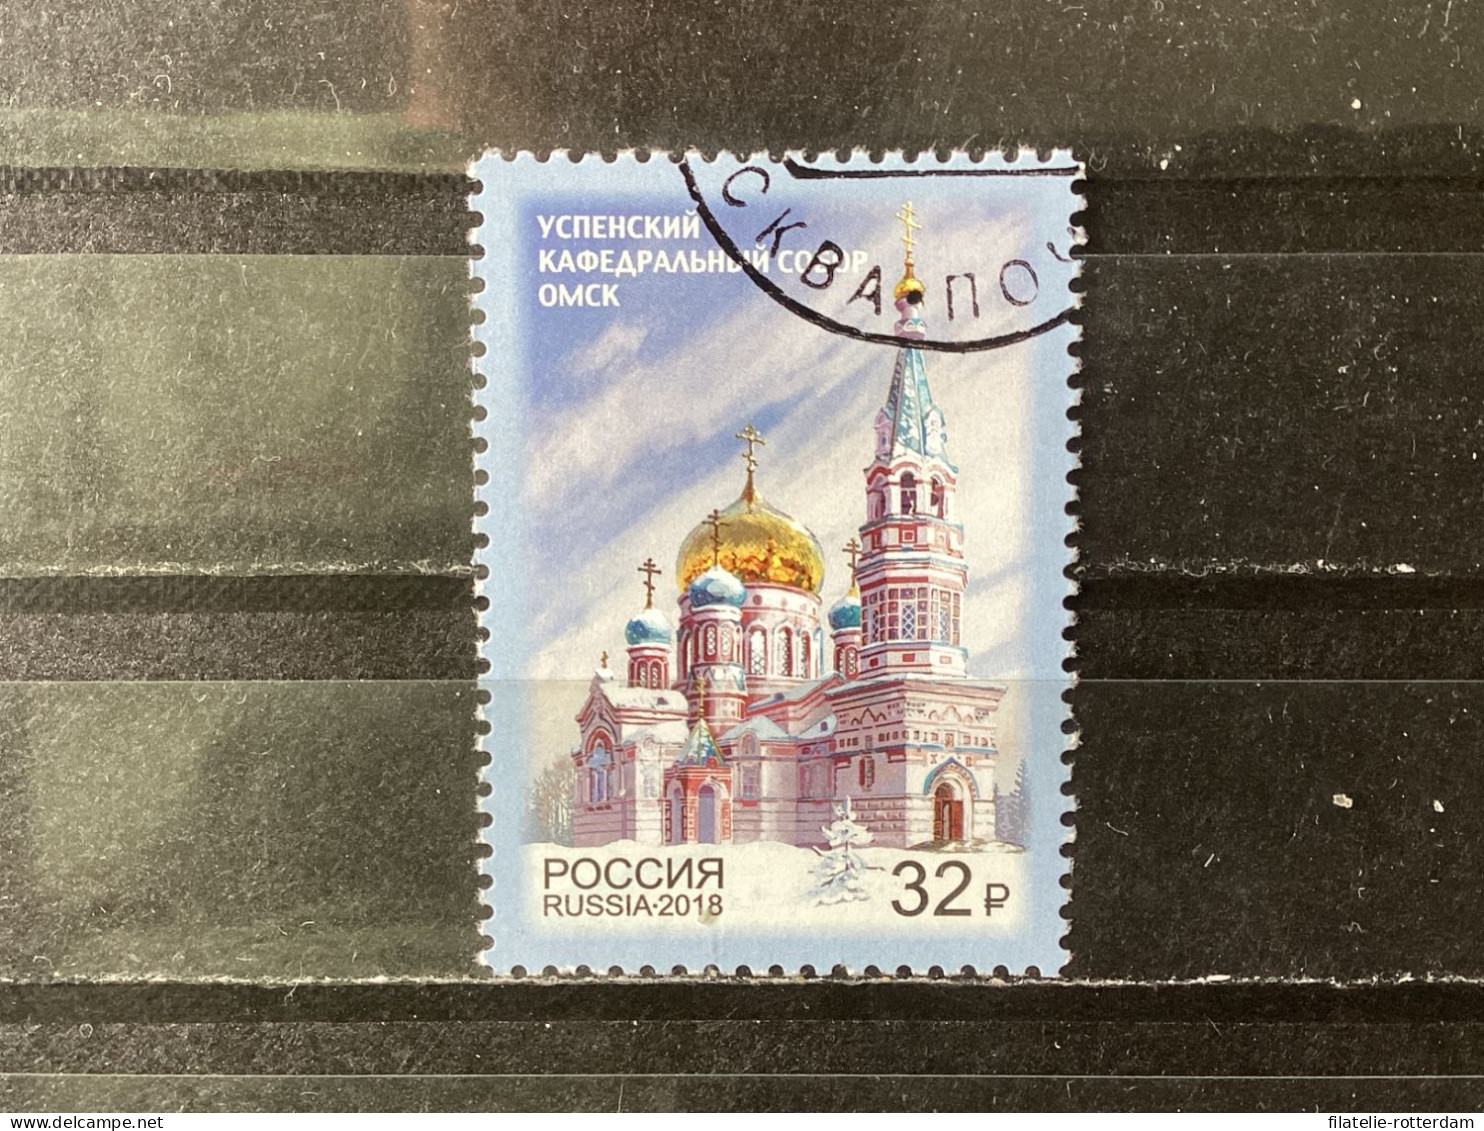 Russia / Rusland - Assumption Cathedral, Omsk (32) 2018 - Gebruikt